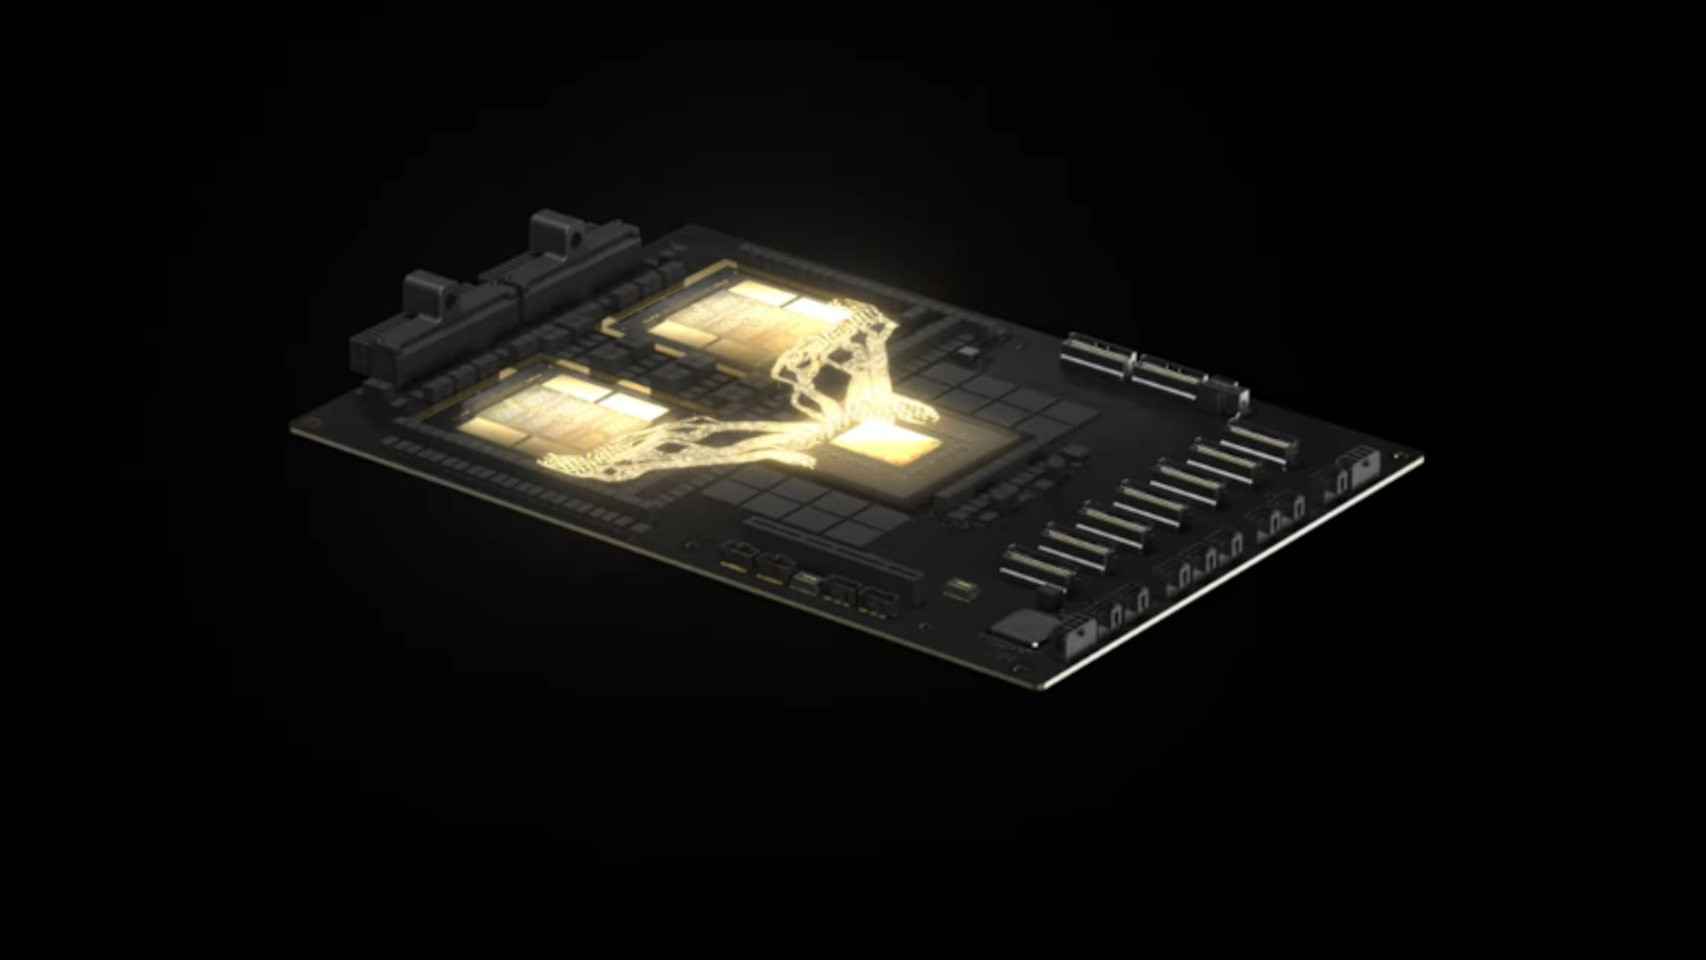 El superchip GB200 de Nvidia basado en la plataforma Blackwell